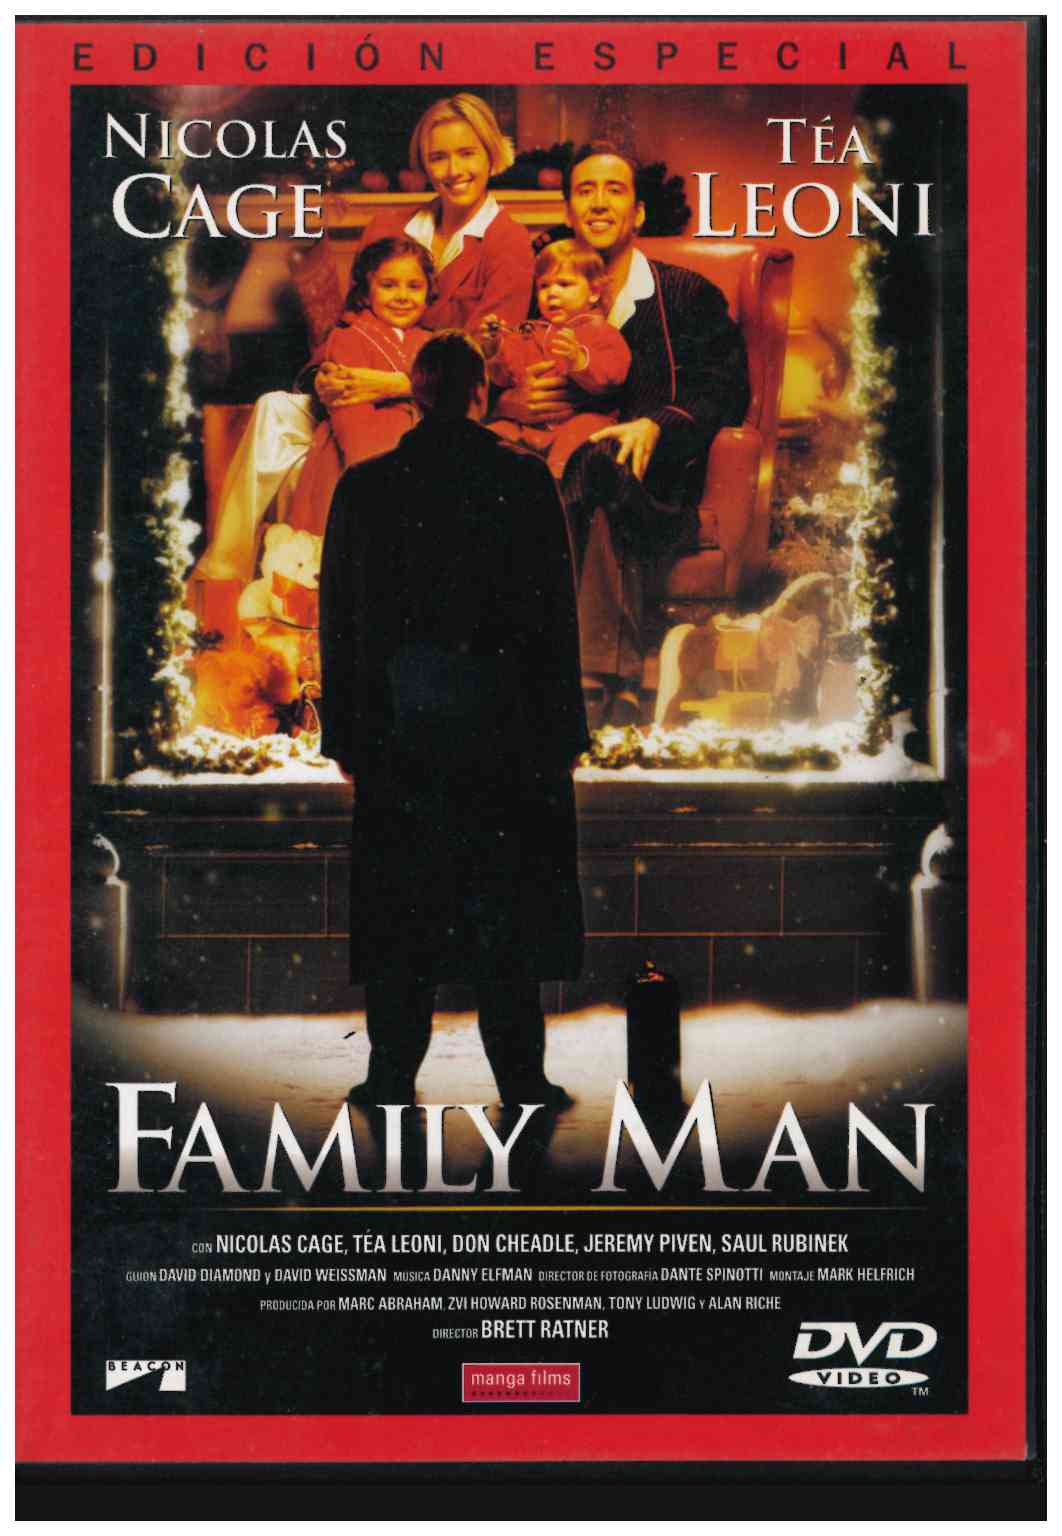 Family Man. Manga Films 2000. Nicolas Cage, Téa Leoni